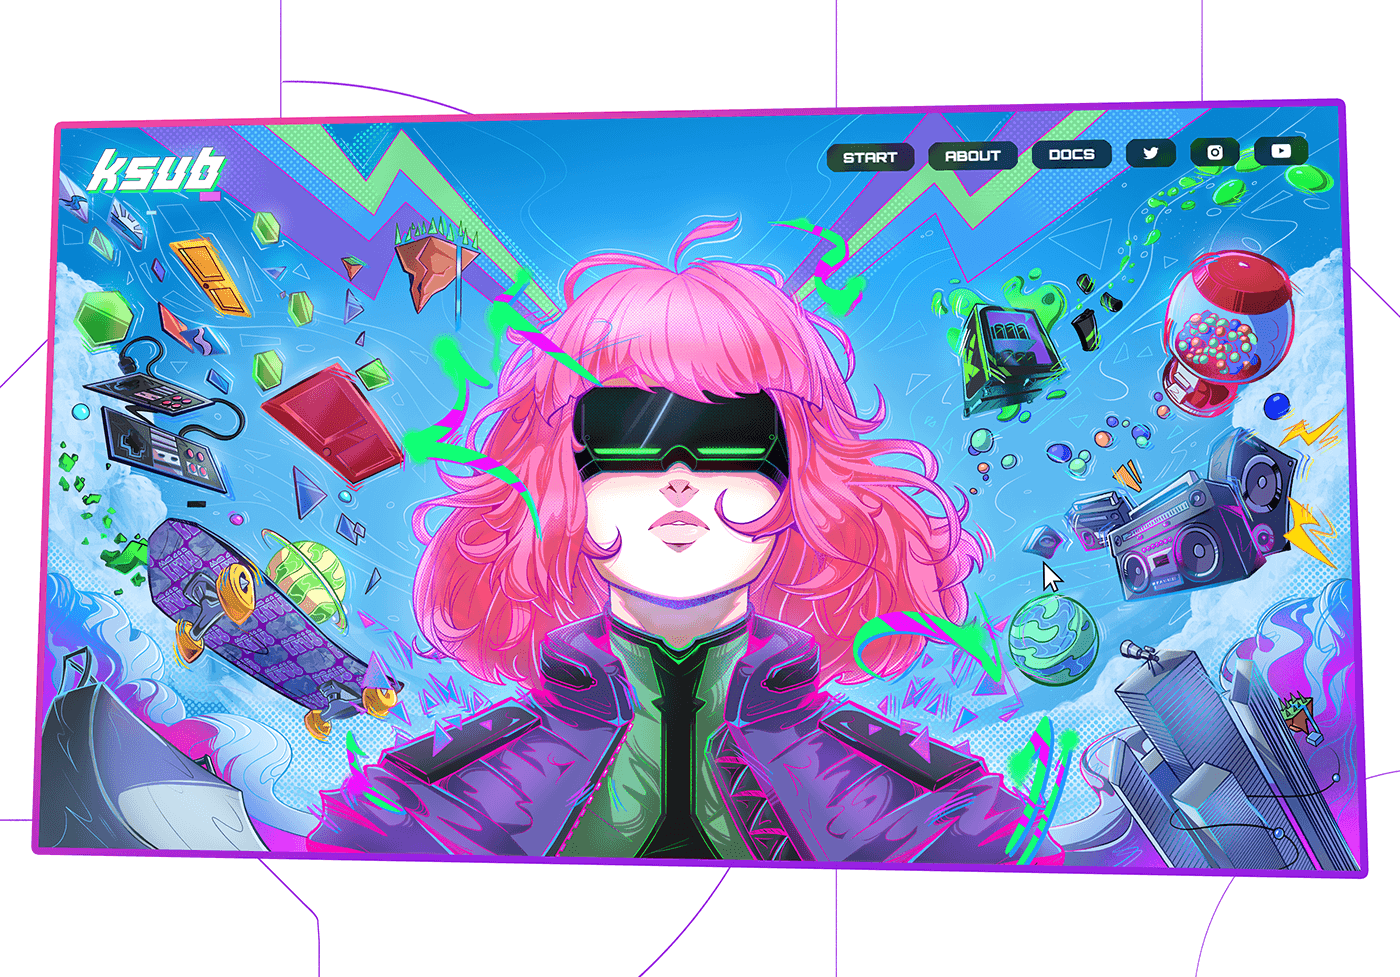 metaverse Cyberpunk Web Design  ILLUSTRATION  Digital Art  Character design  artwork color brand identity Advertising 